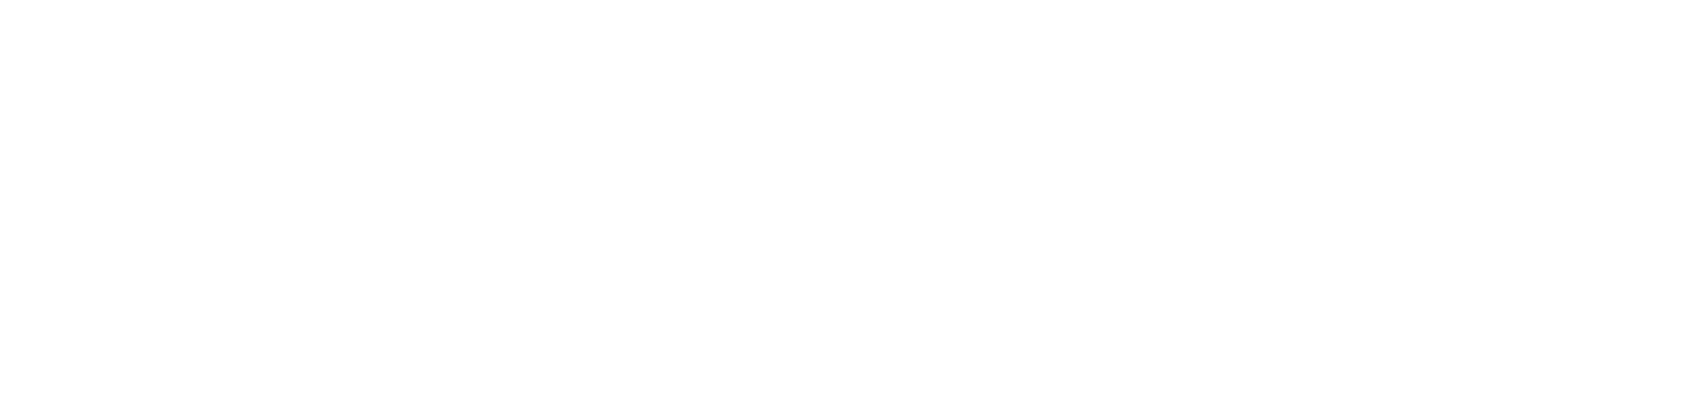 Wuliangye Yibin logo grand pour les fonds sombres (PNG transparent)